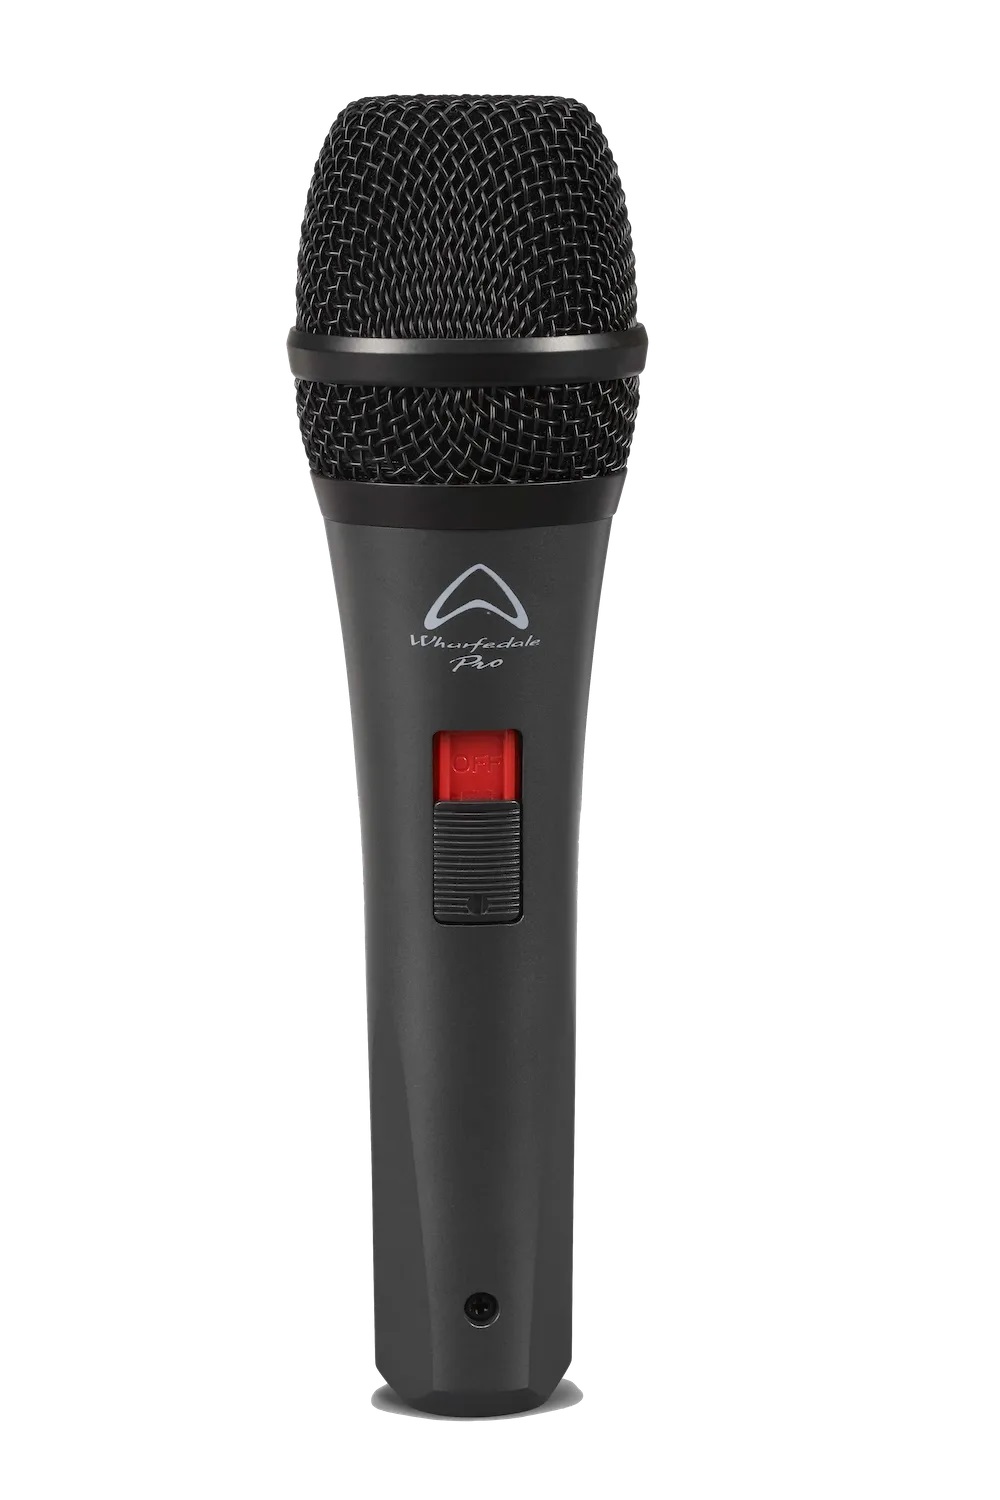 DM 5.0S Dynamisches Gesangsmikrofon inkl. XLR Kabel